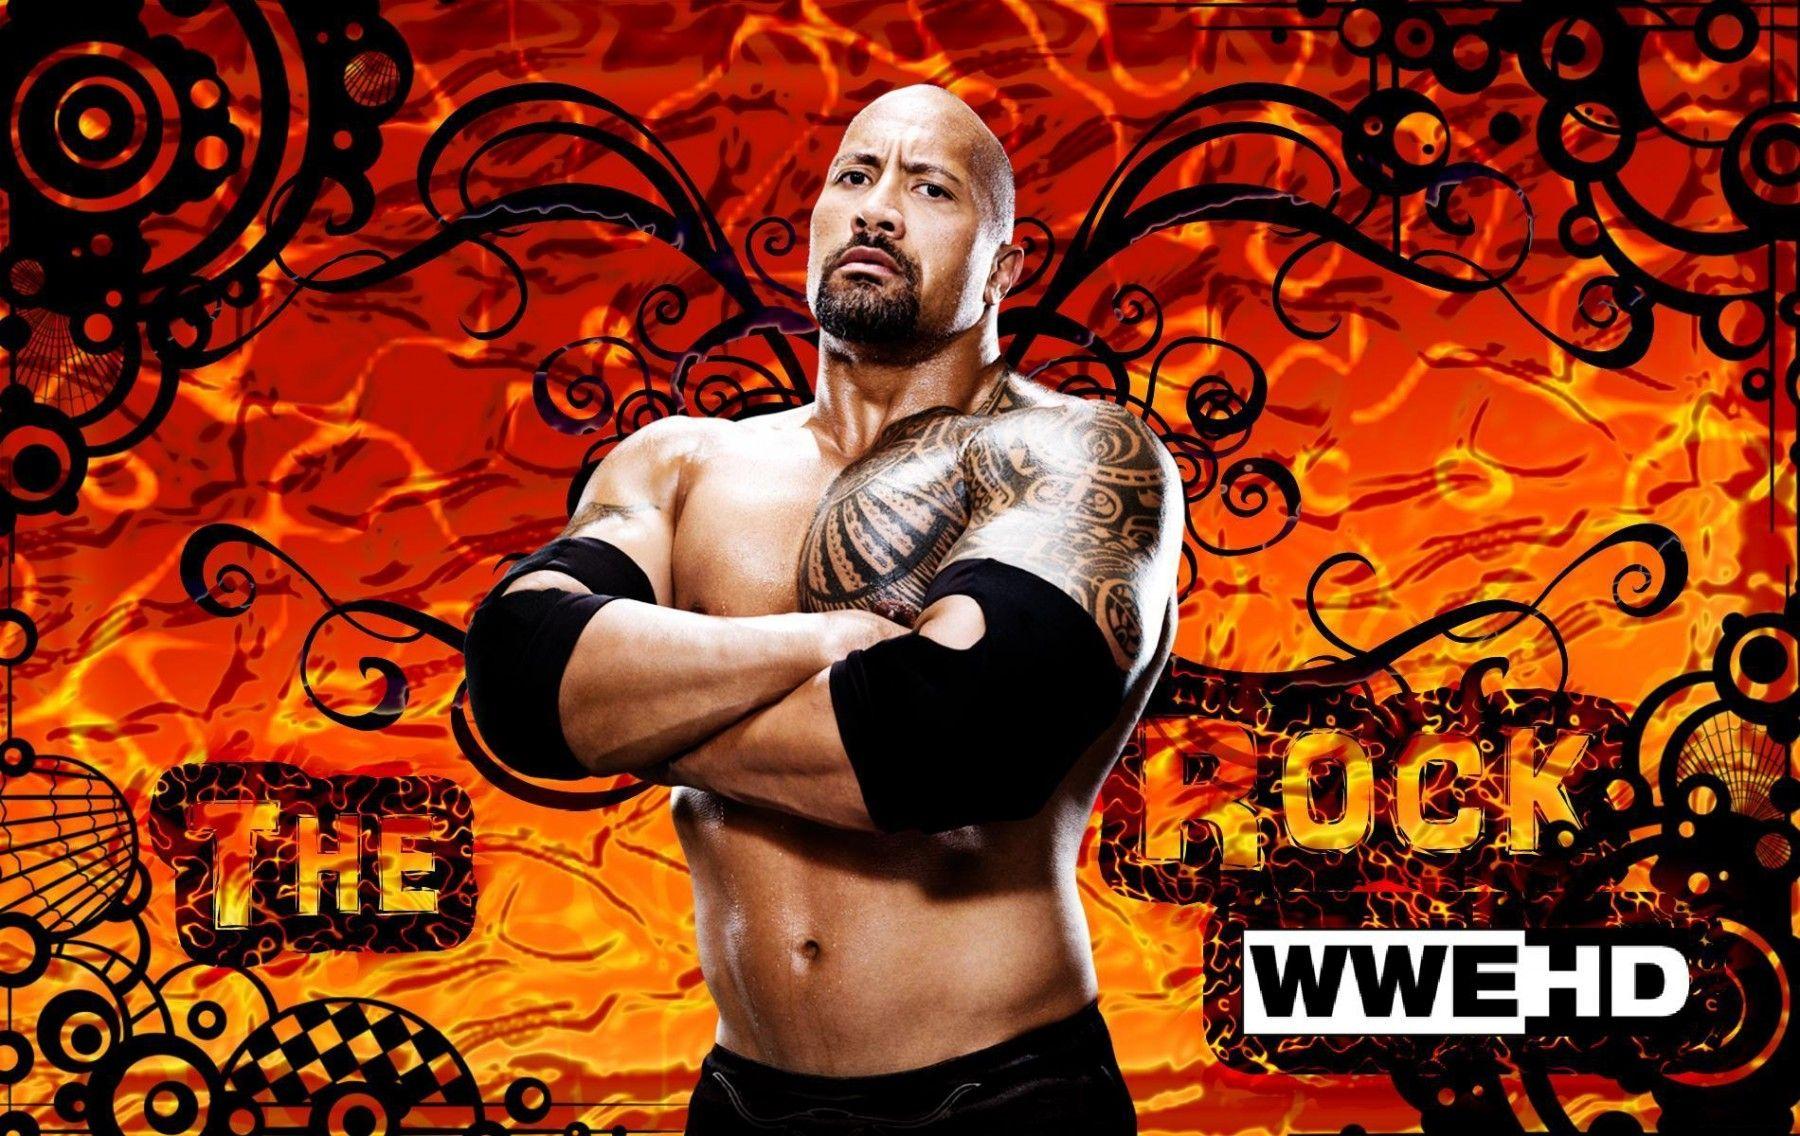 The Rock HD Wallpaper Free Download WWE HD WALLPAPER FREE DOWNLOAD